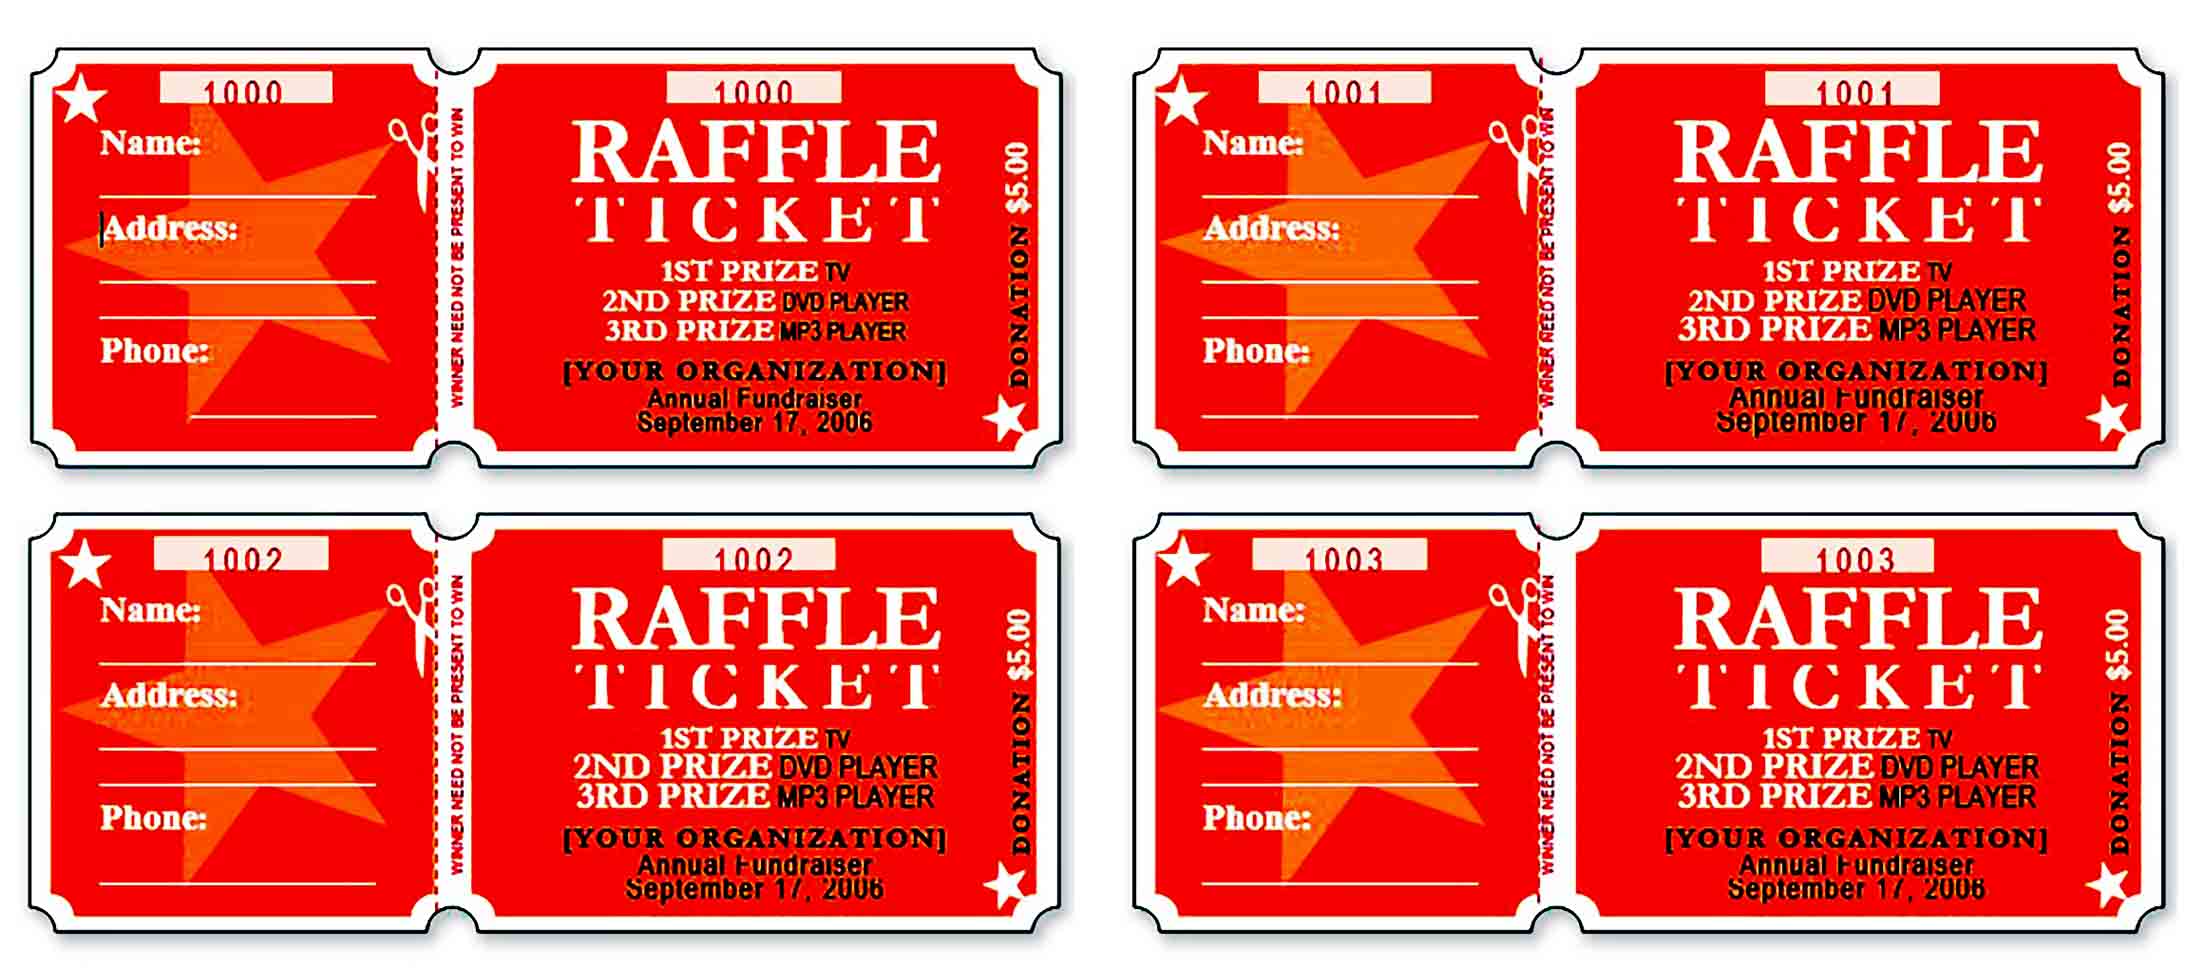 raffle ticket templatess